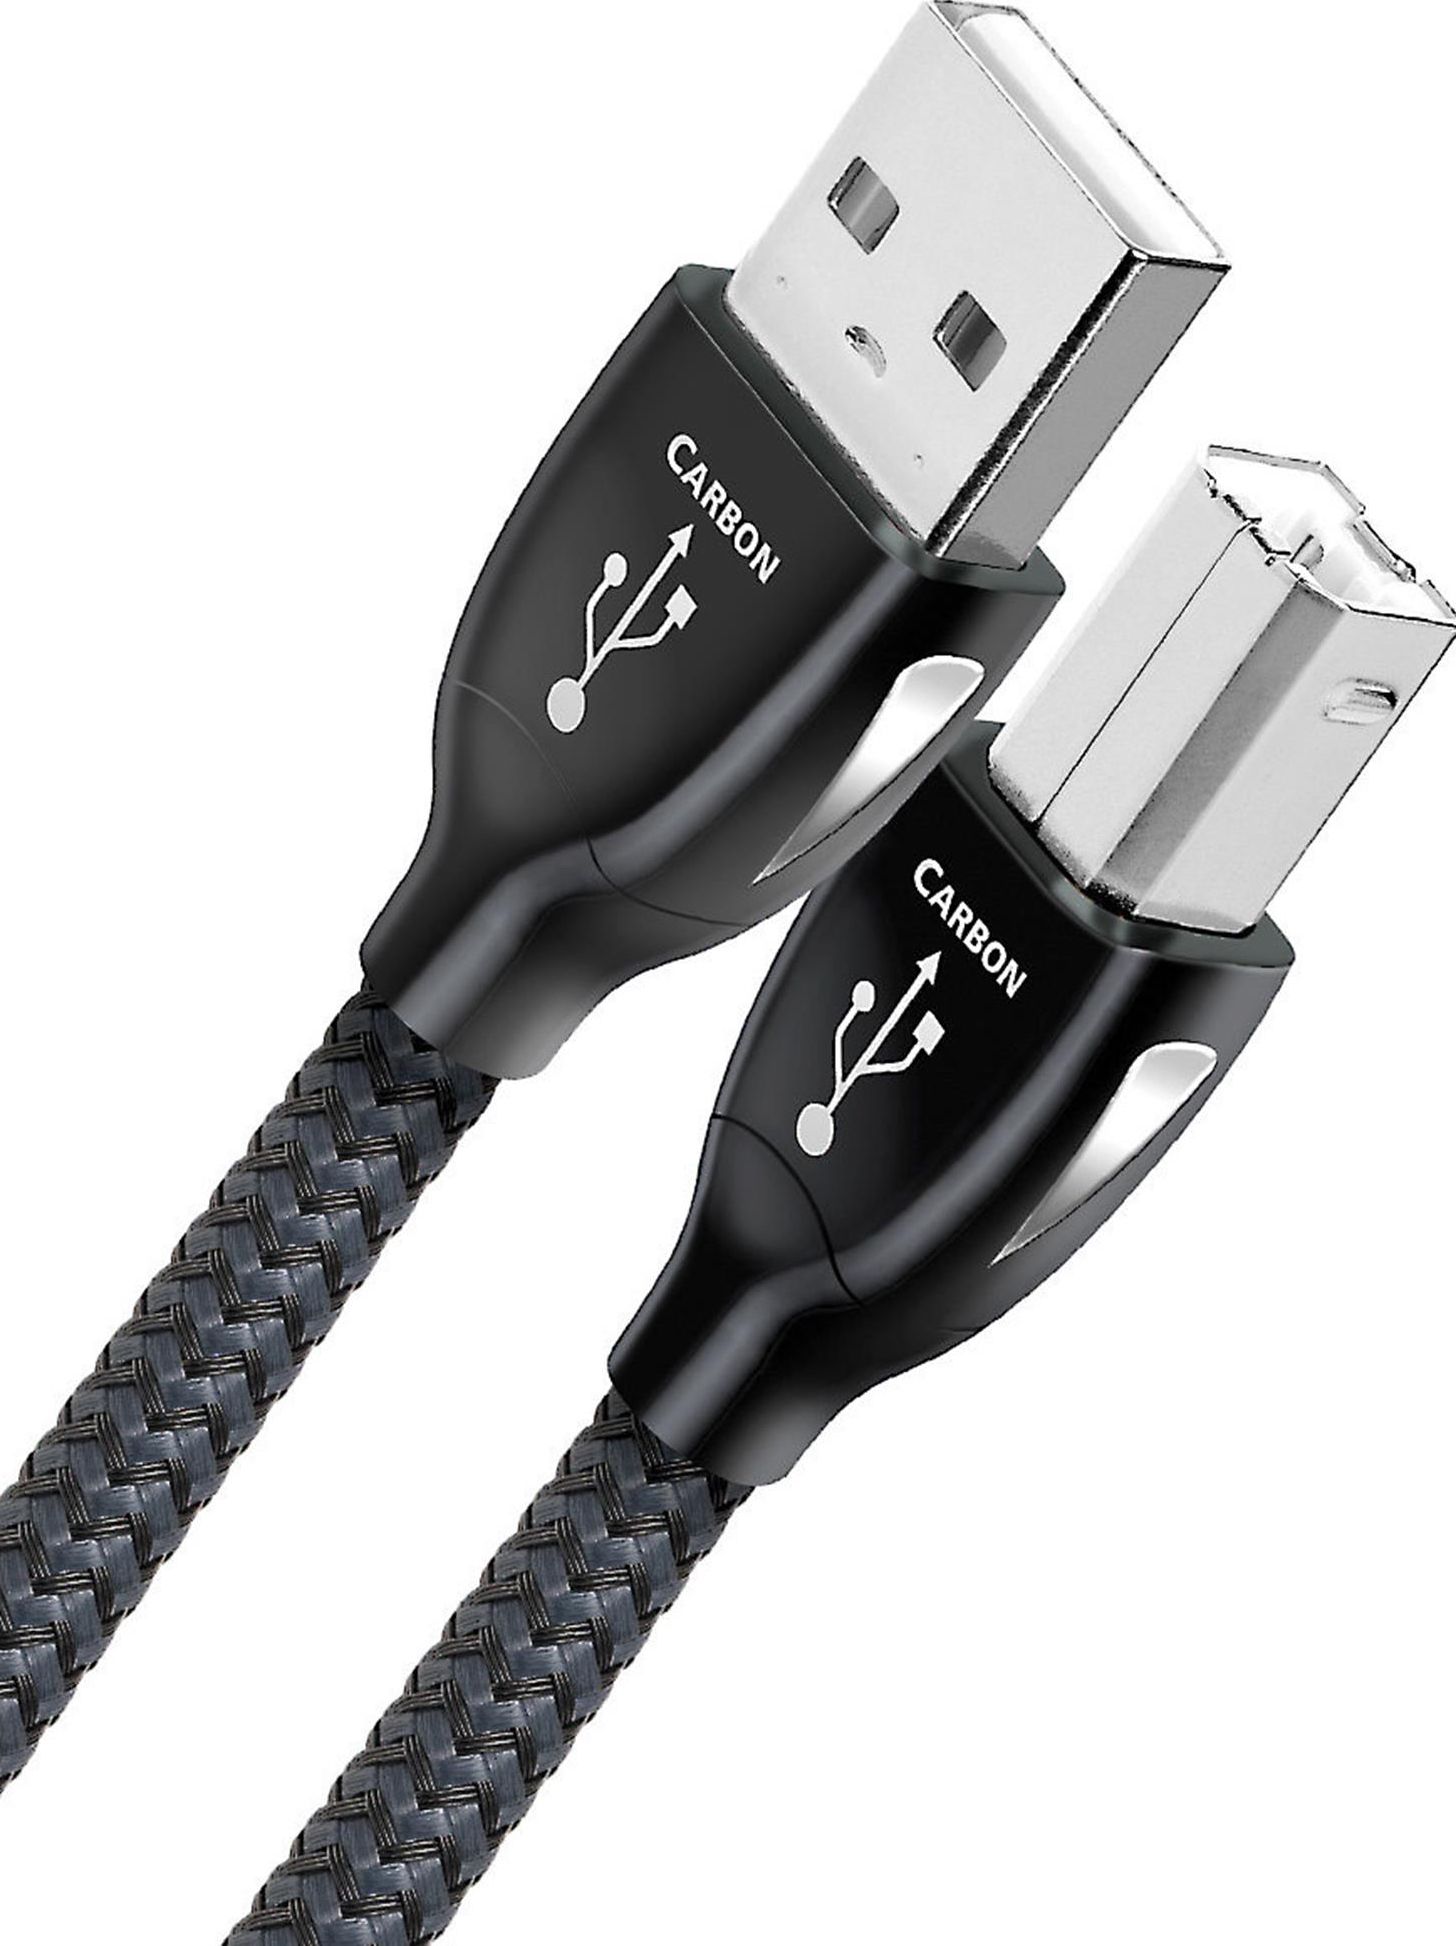 AudioQuest® Carbon 0.75 m USB A to B Cable | Paradyme